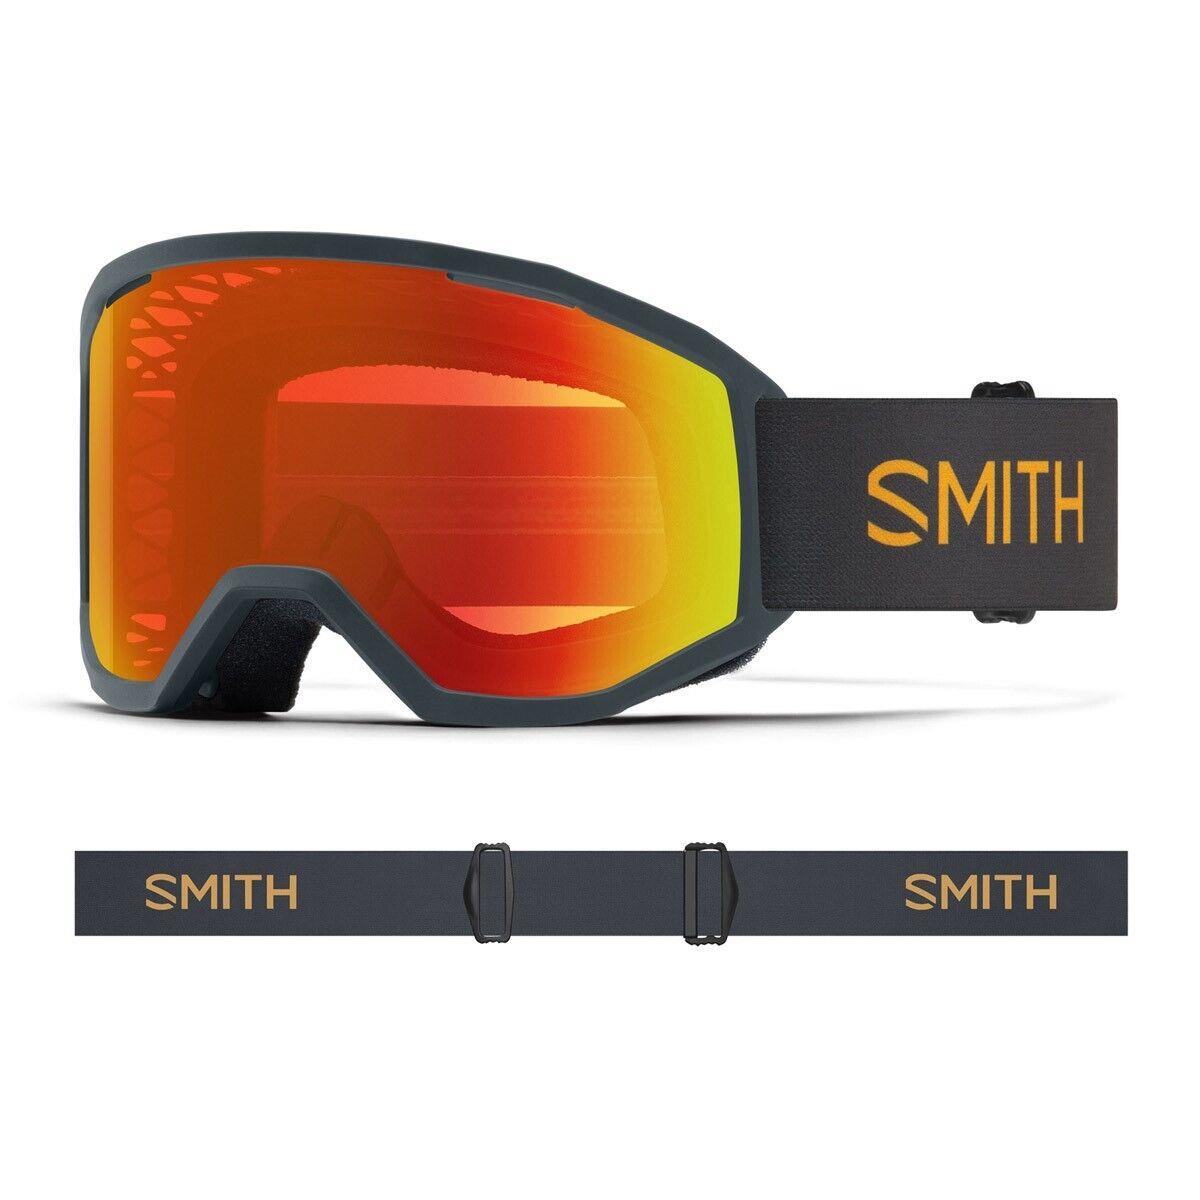 Smith Loam Mtb / Bike Goggles Slate Grey Frame Red Mirror + Bonus Lens